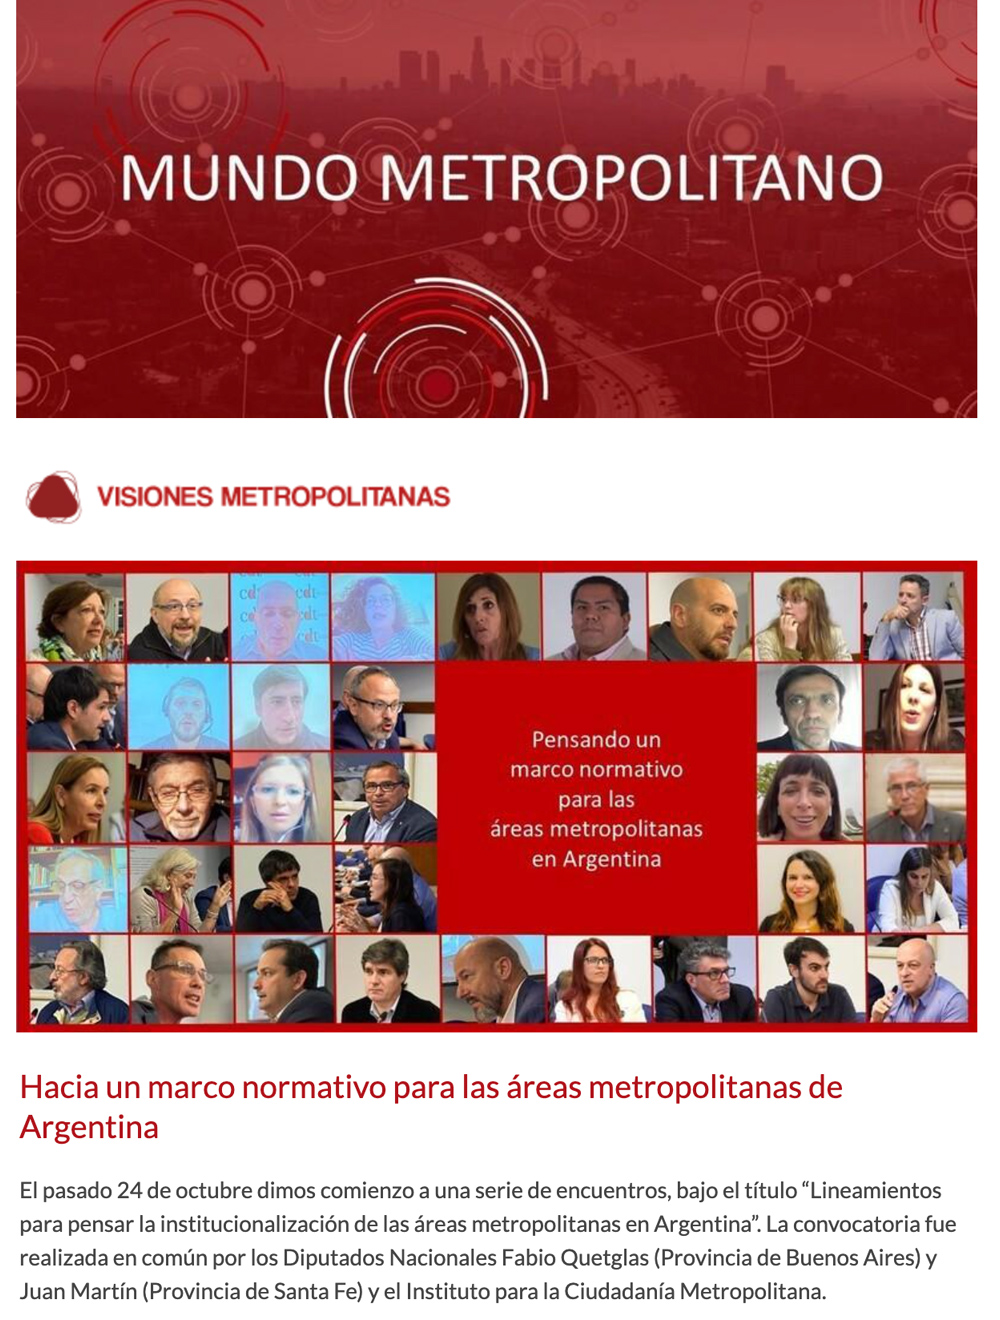 Newsletter Mundo Metropolitano 10